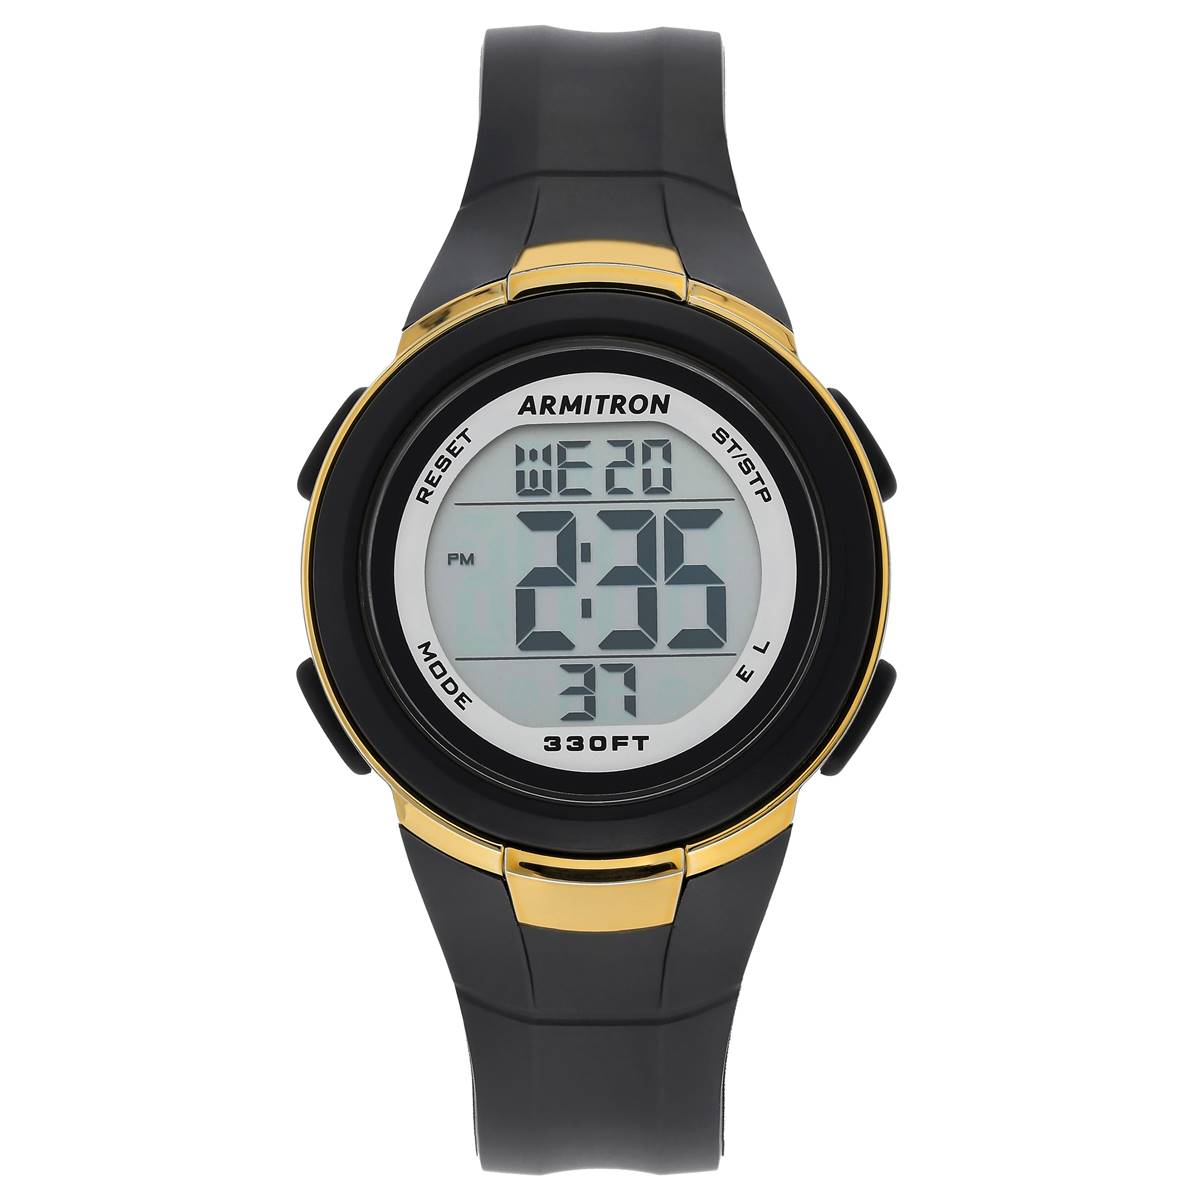 Armitron(R) Digital Chronograph With Gold Watch - 45-712